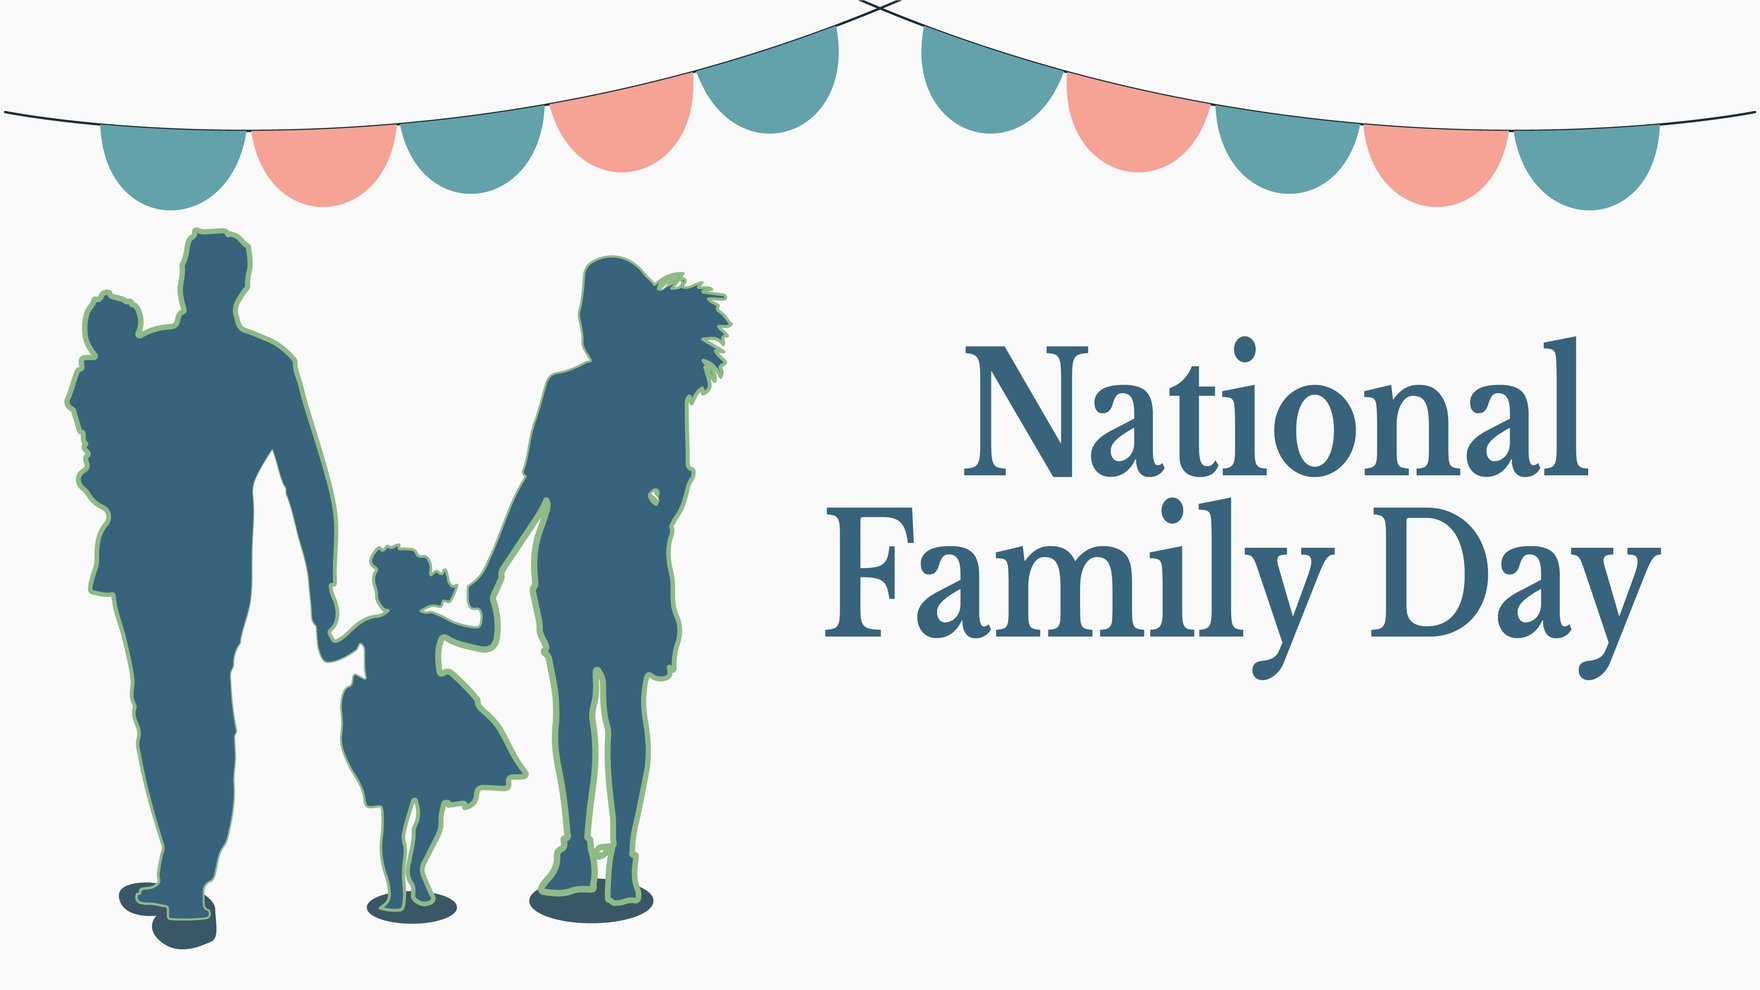 National Family Day Image Background in PDF, Illustrator, PSD, EPS, SVG, JPG, PNG